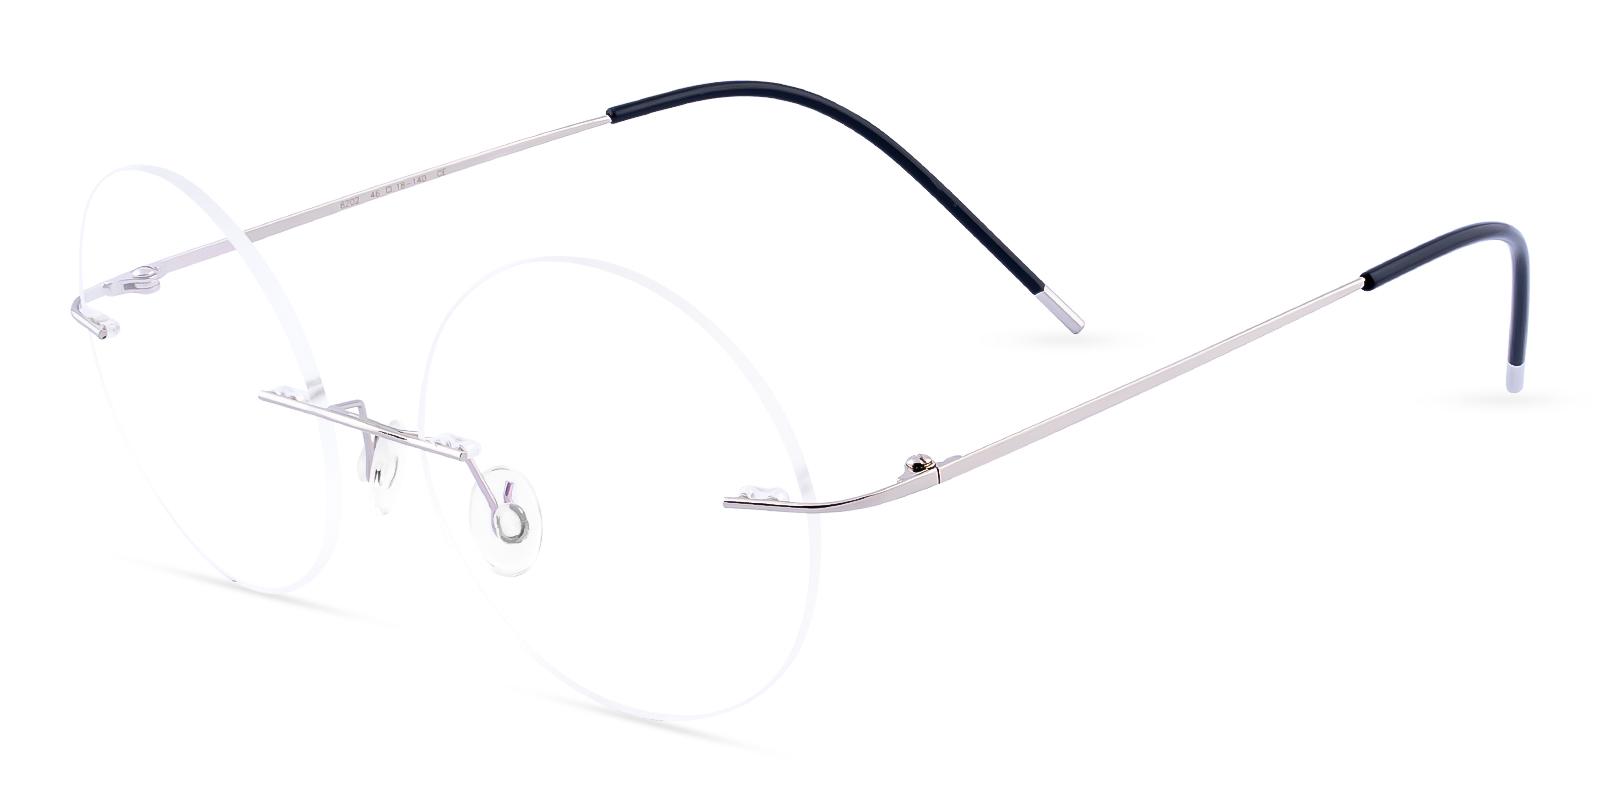 Hiawatha Silver Metal Eyeglasses , NosePads Frames from ABBE Glasses